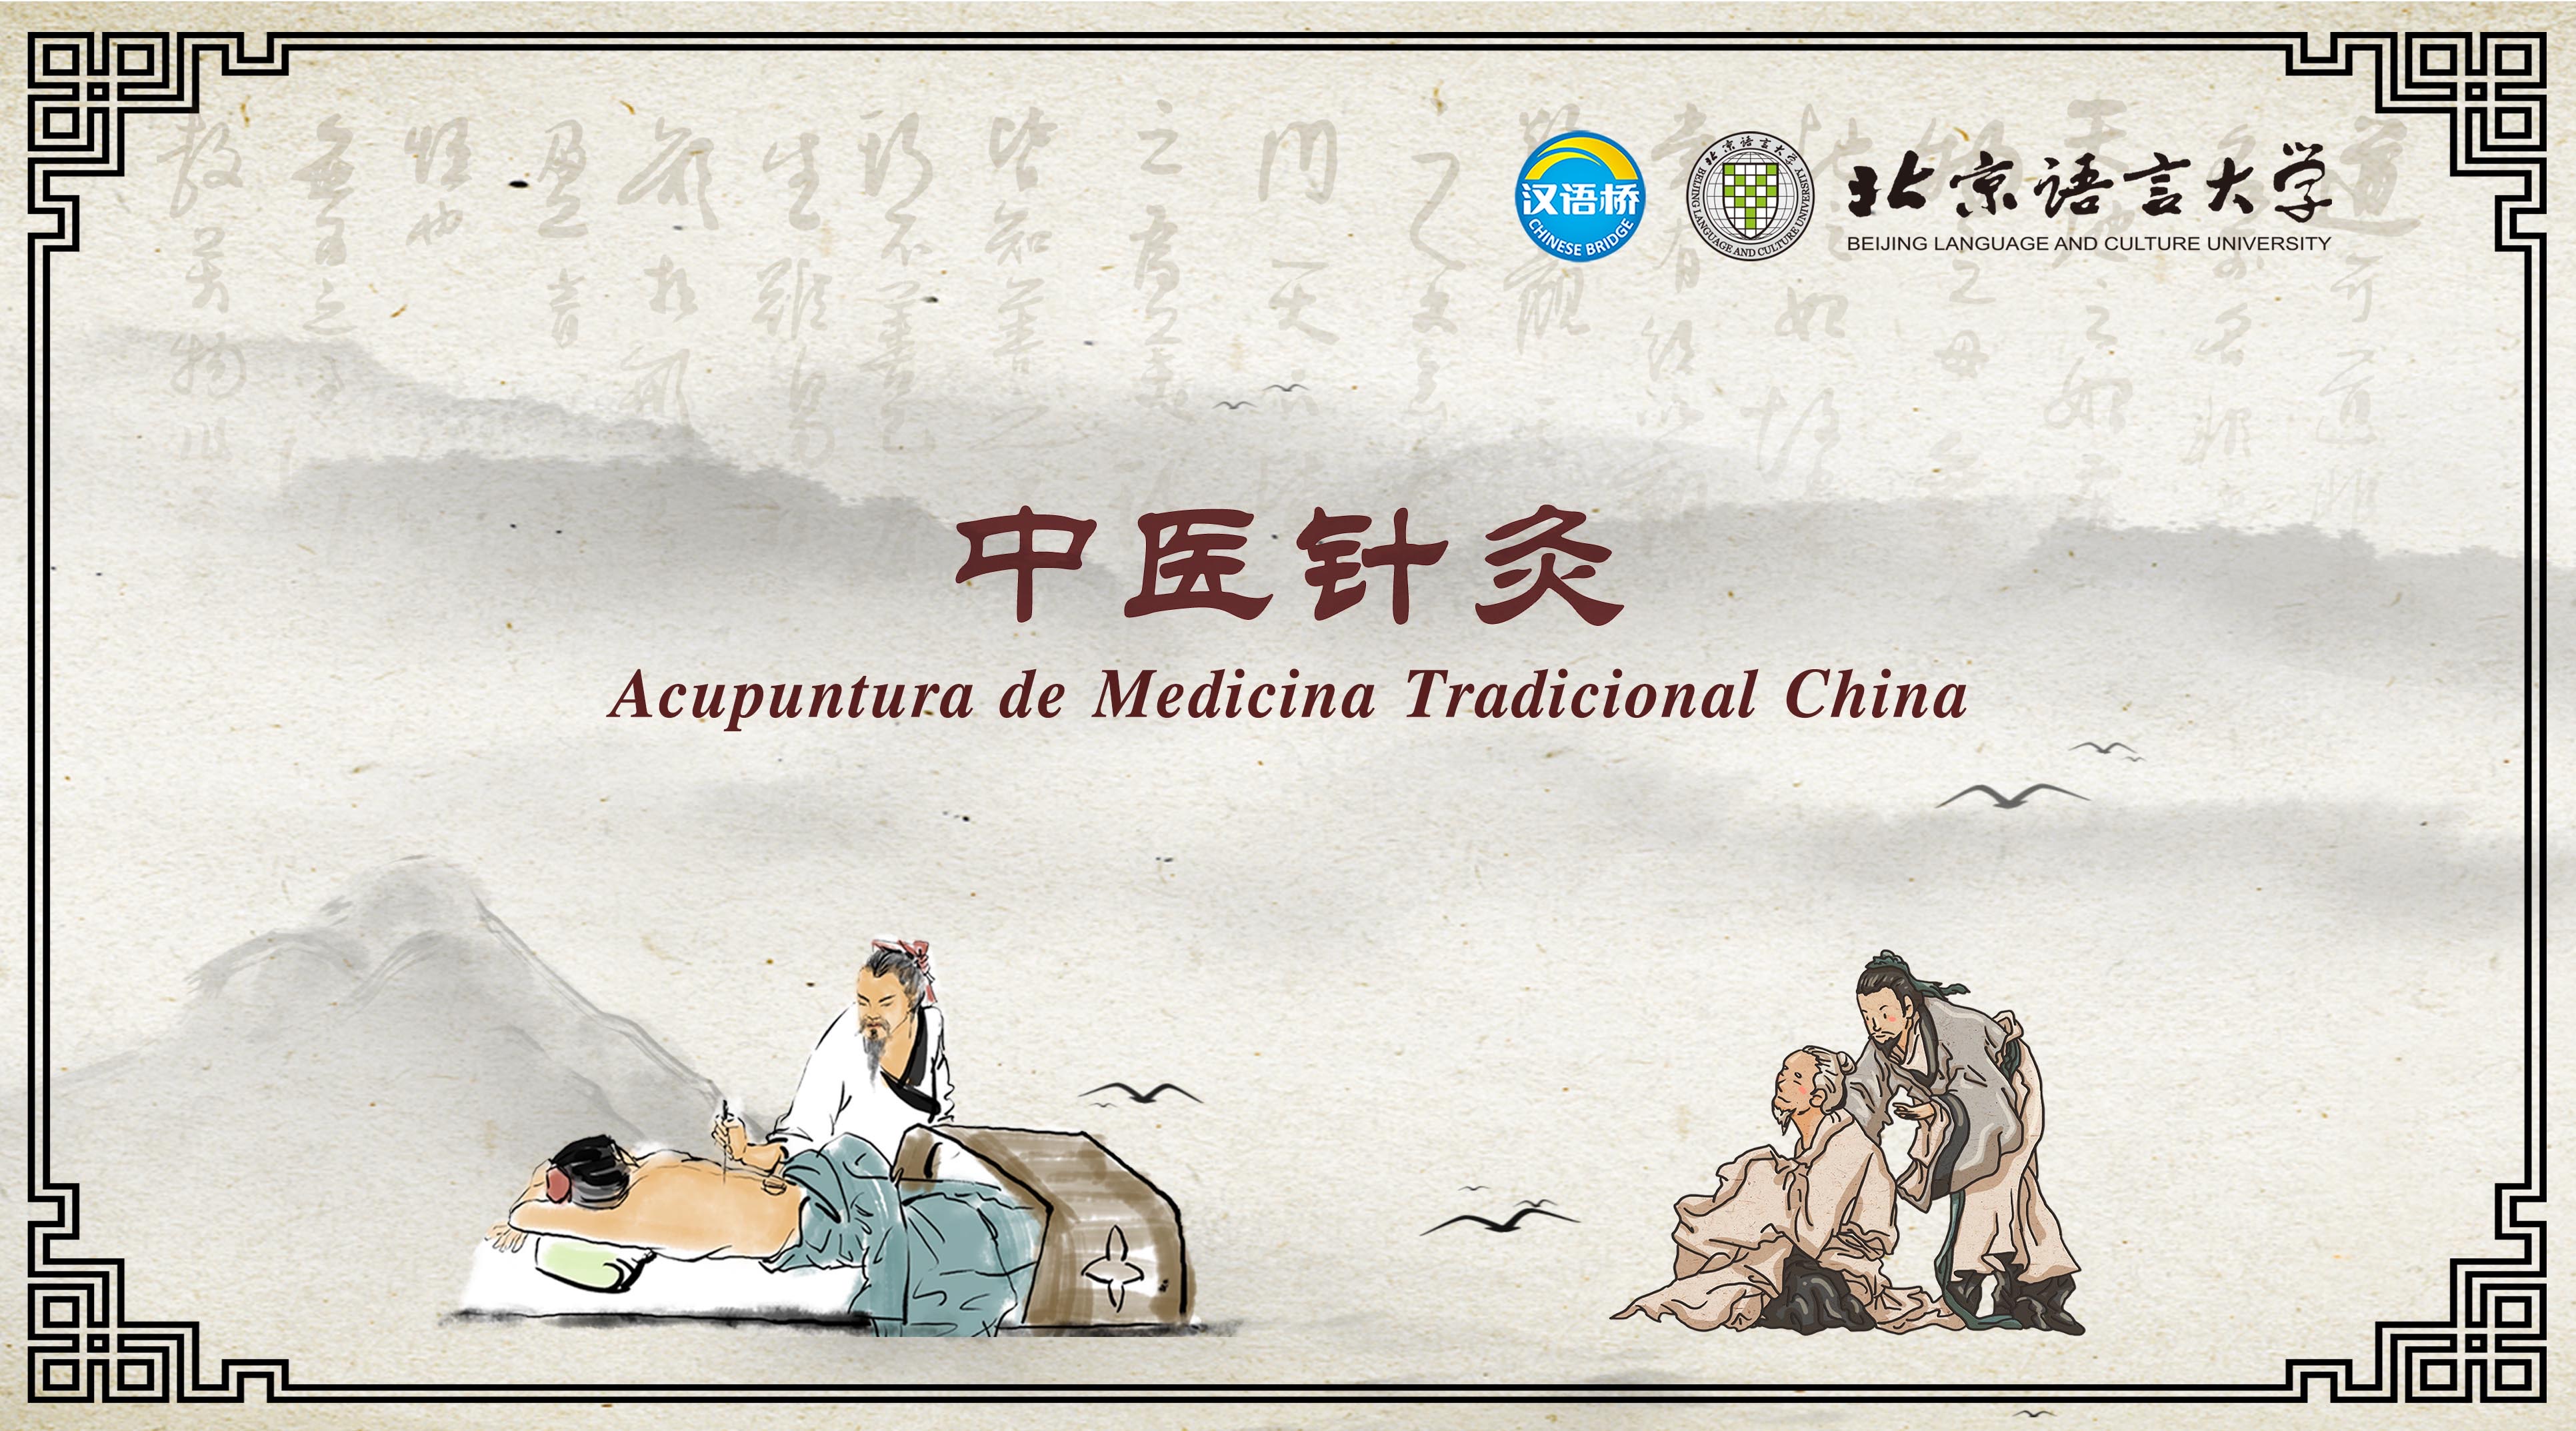 Acupuntura de Medicina Tradicional China